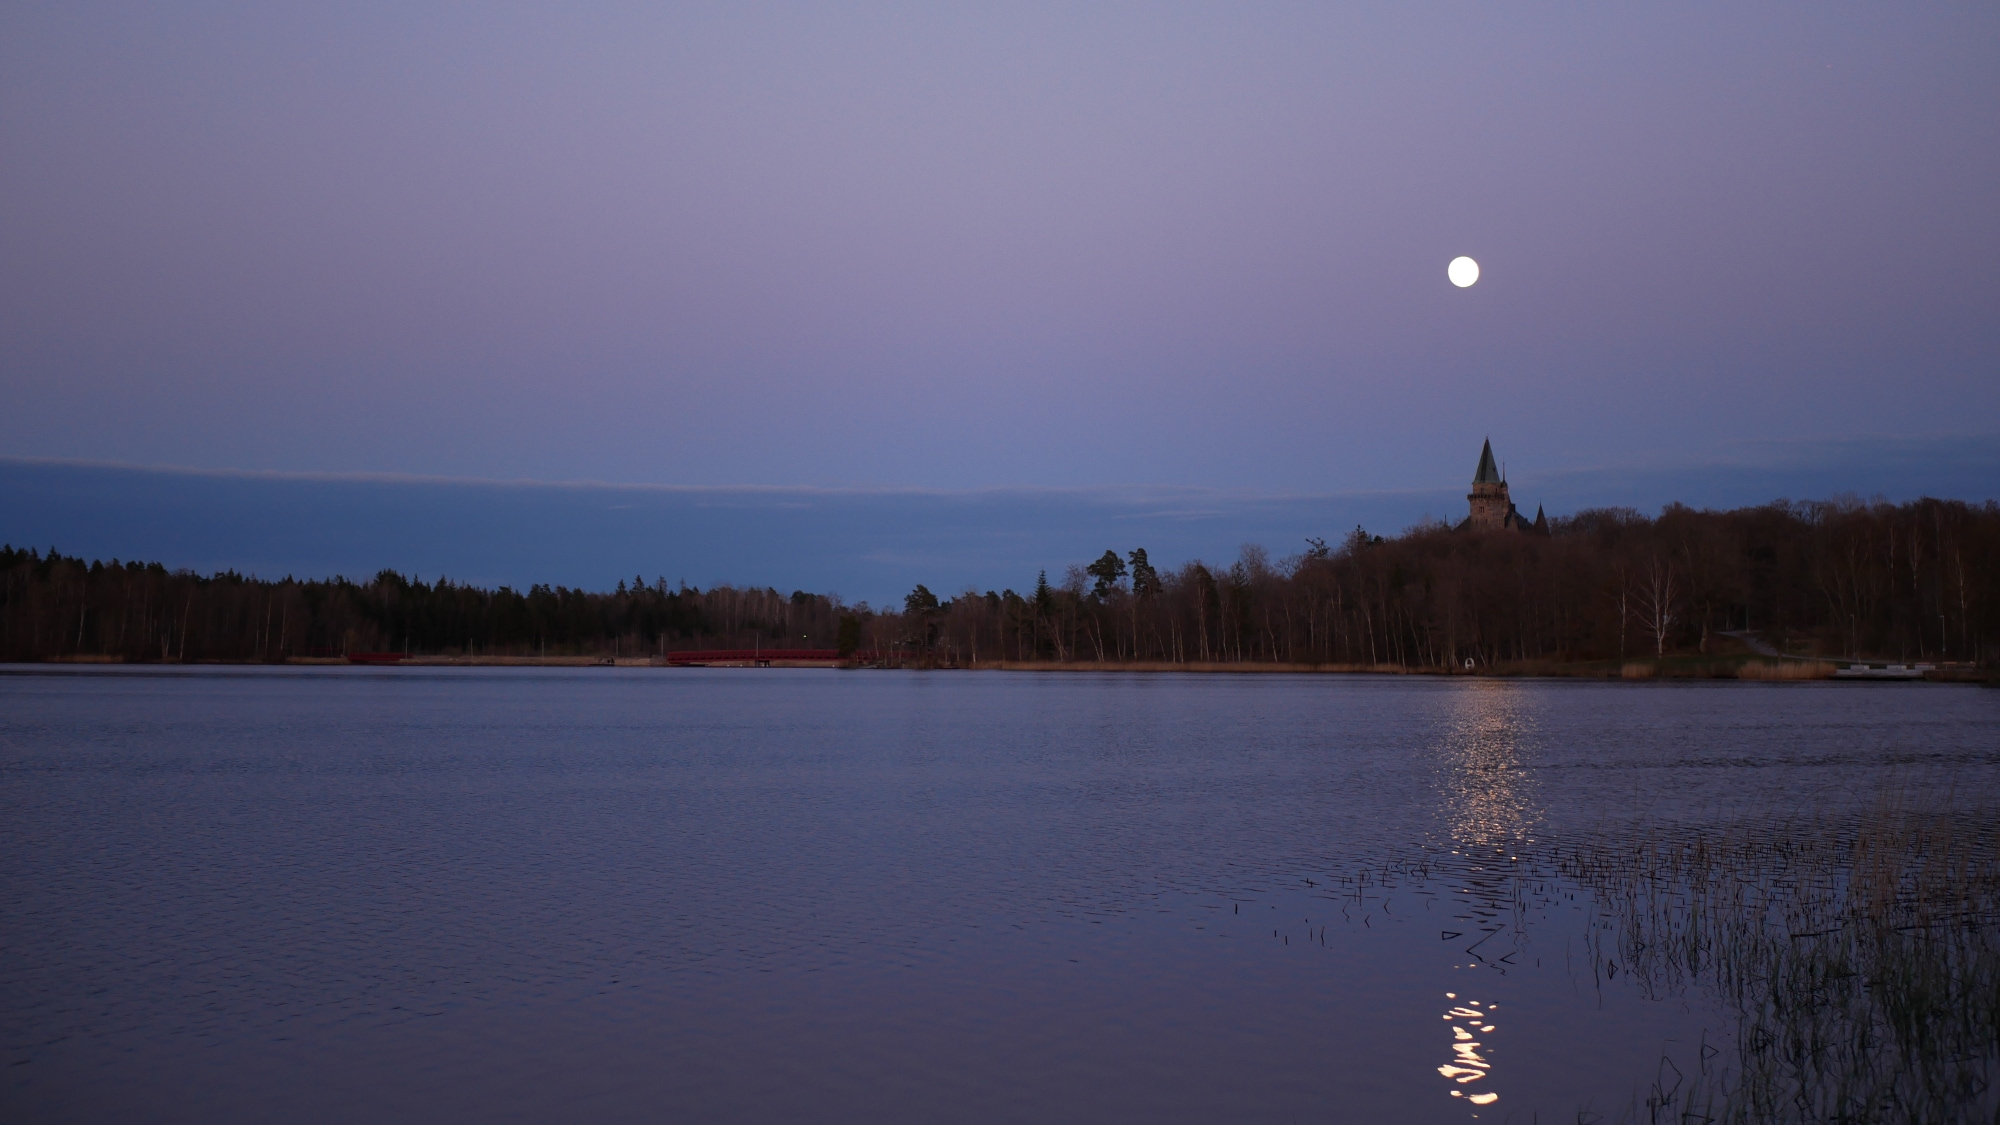 A photo taken at the lake Trummen in Växjö.